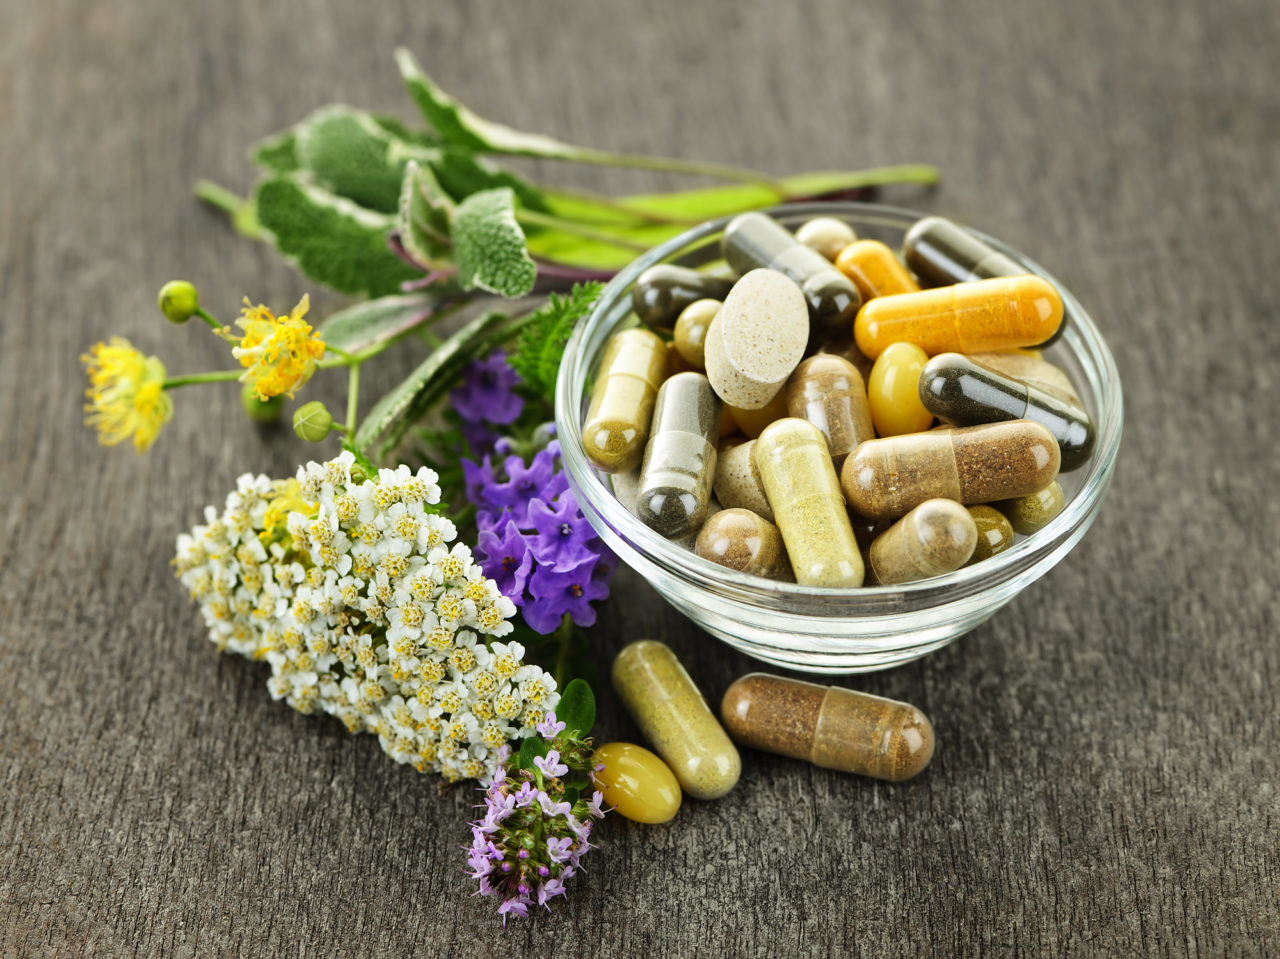 Herbal medicine and herbs